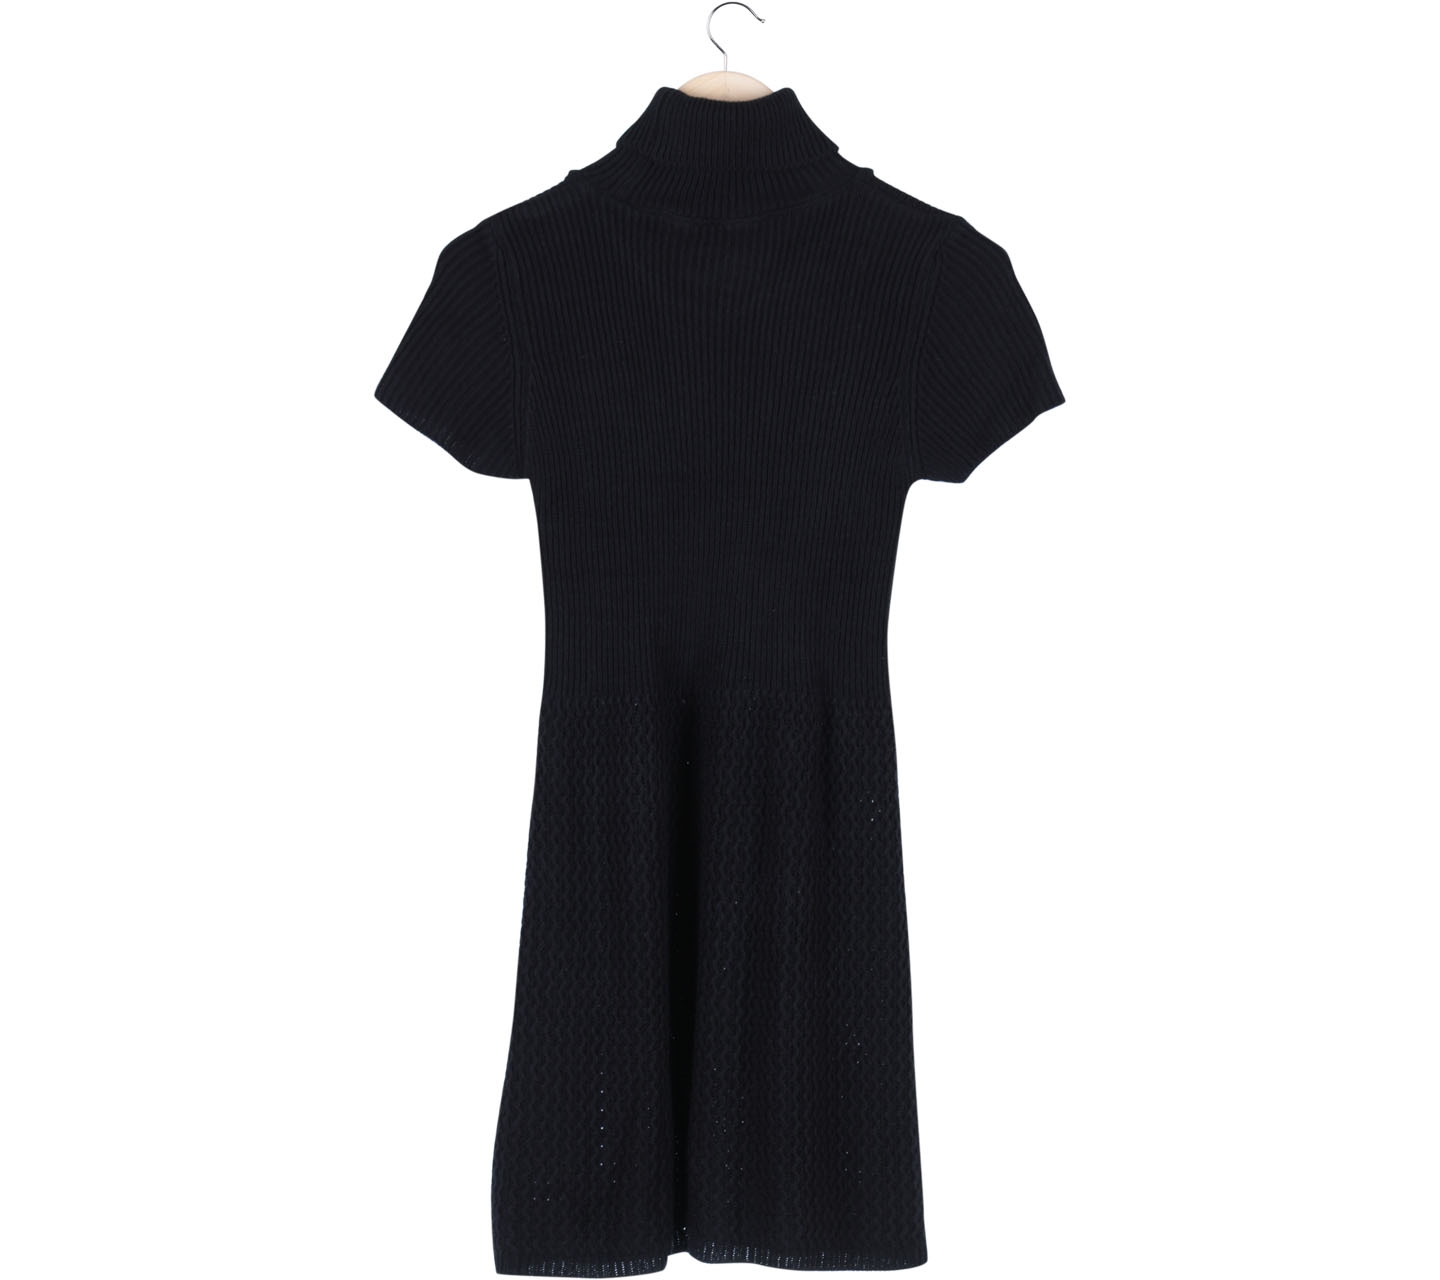 Zara Black Turtle Neck Knitted Mini Dress